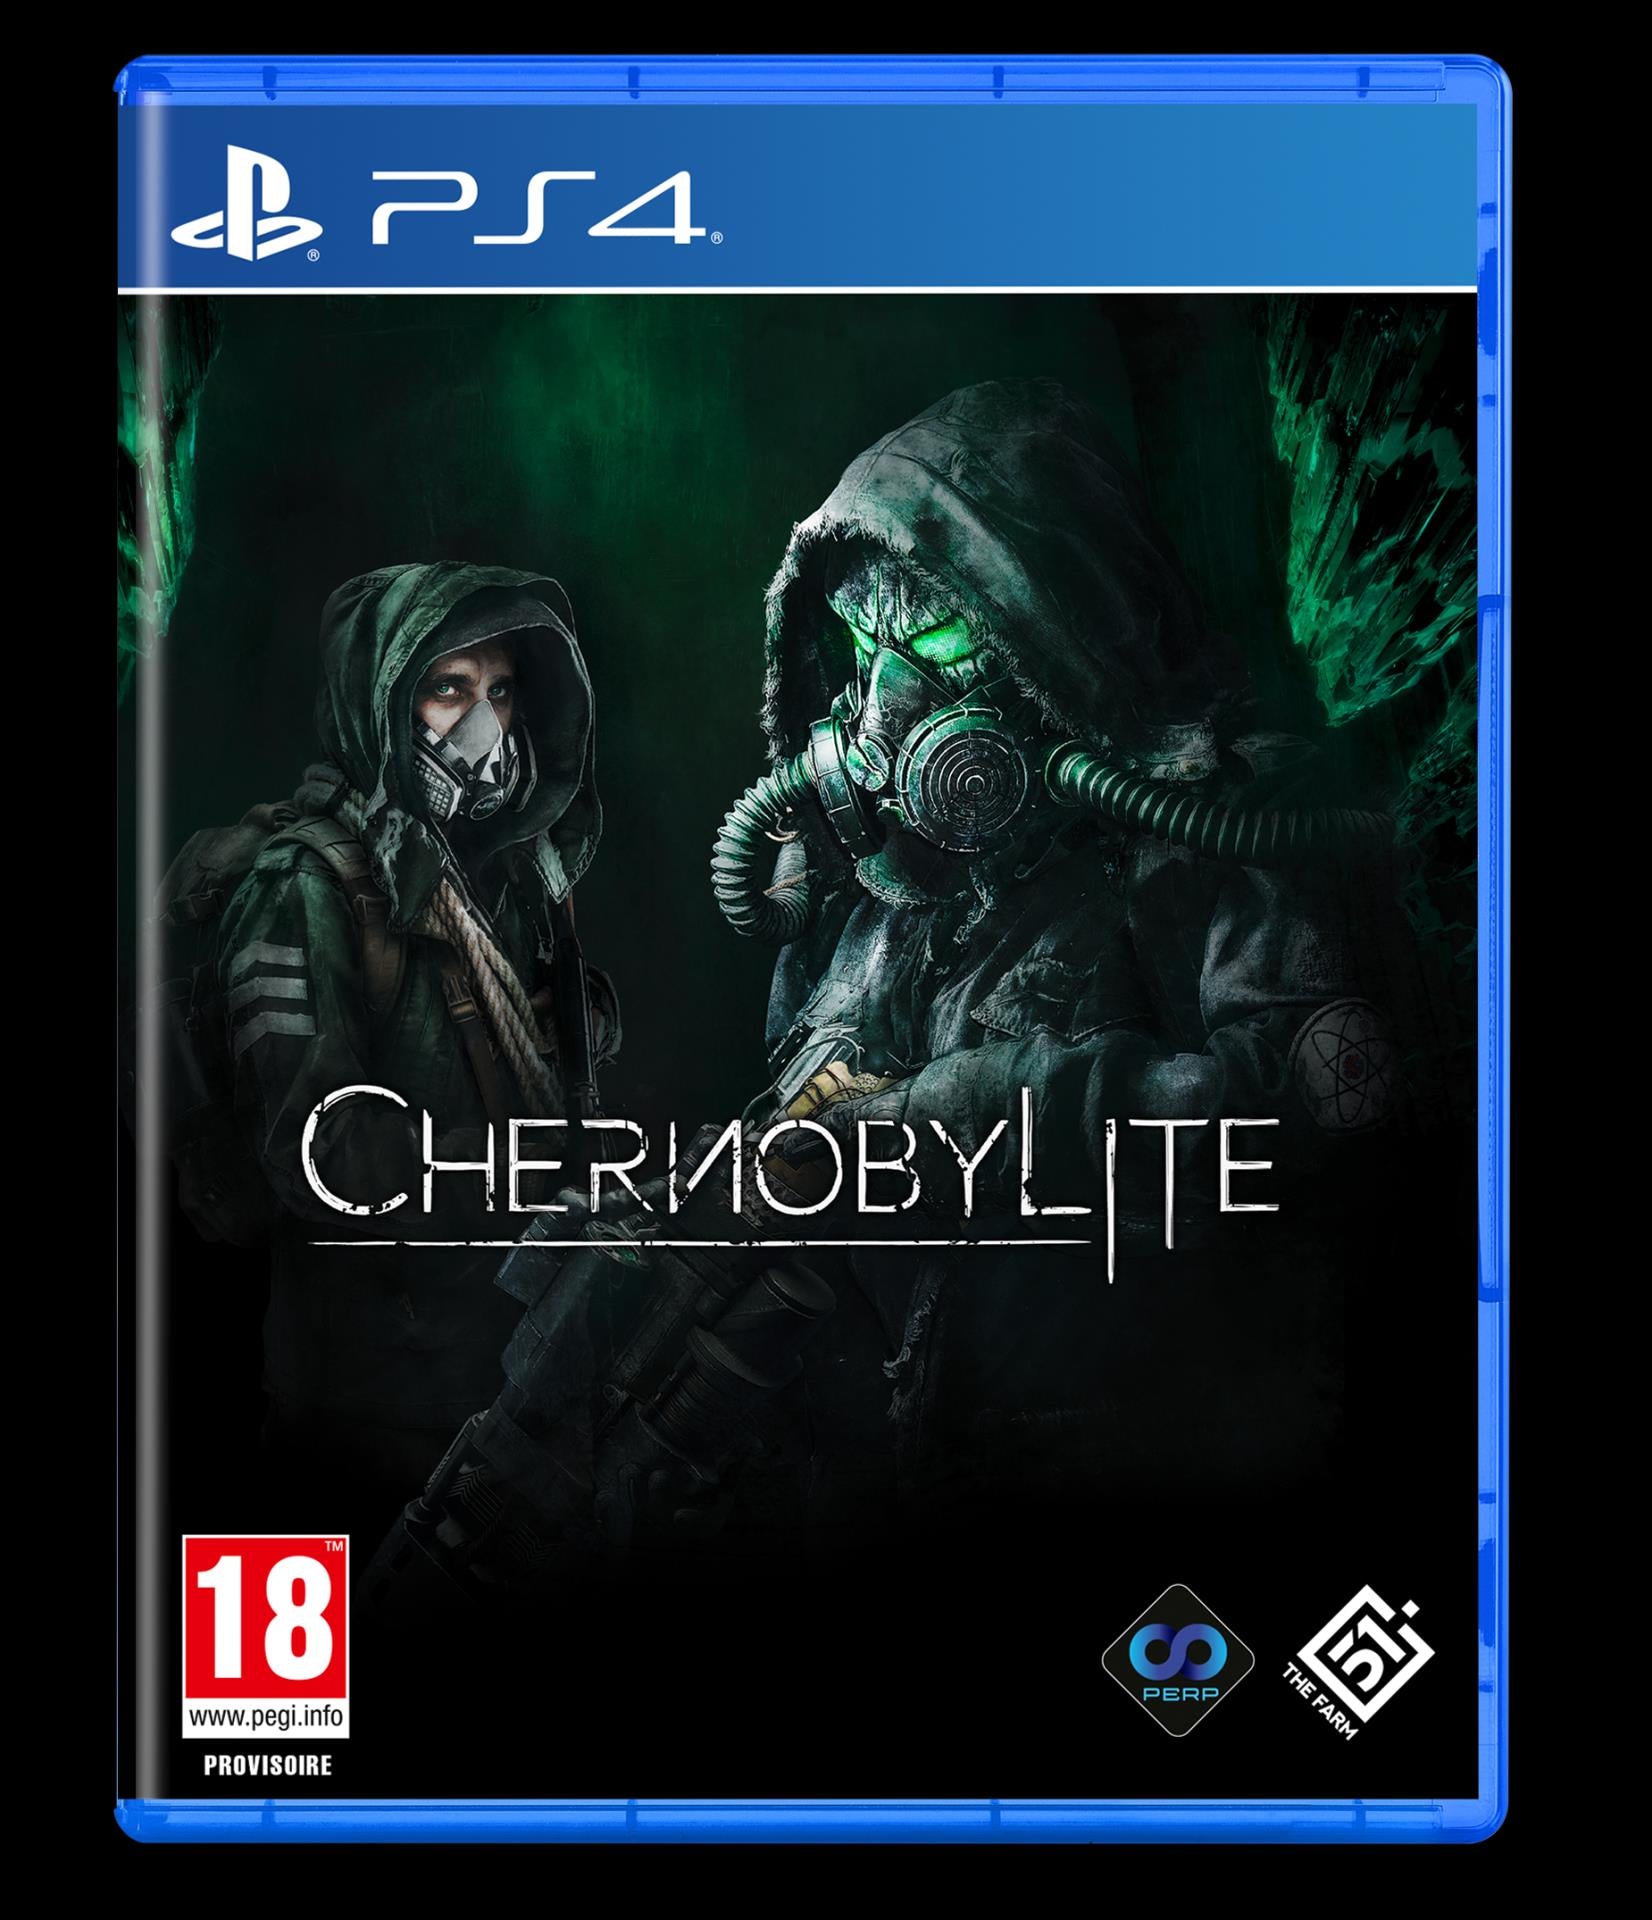 Chernobylite (PS4)